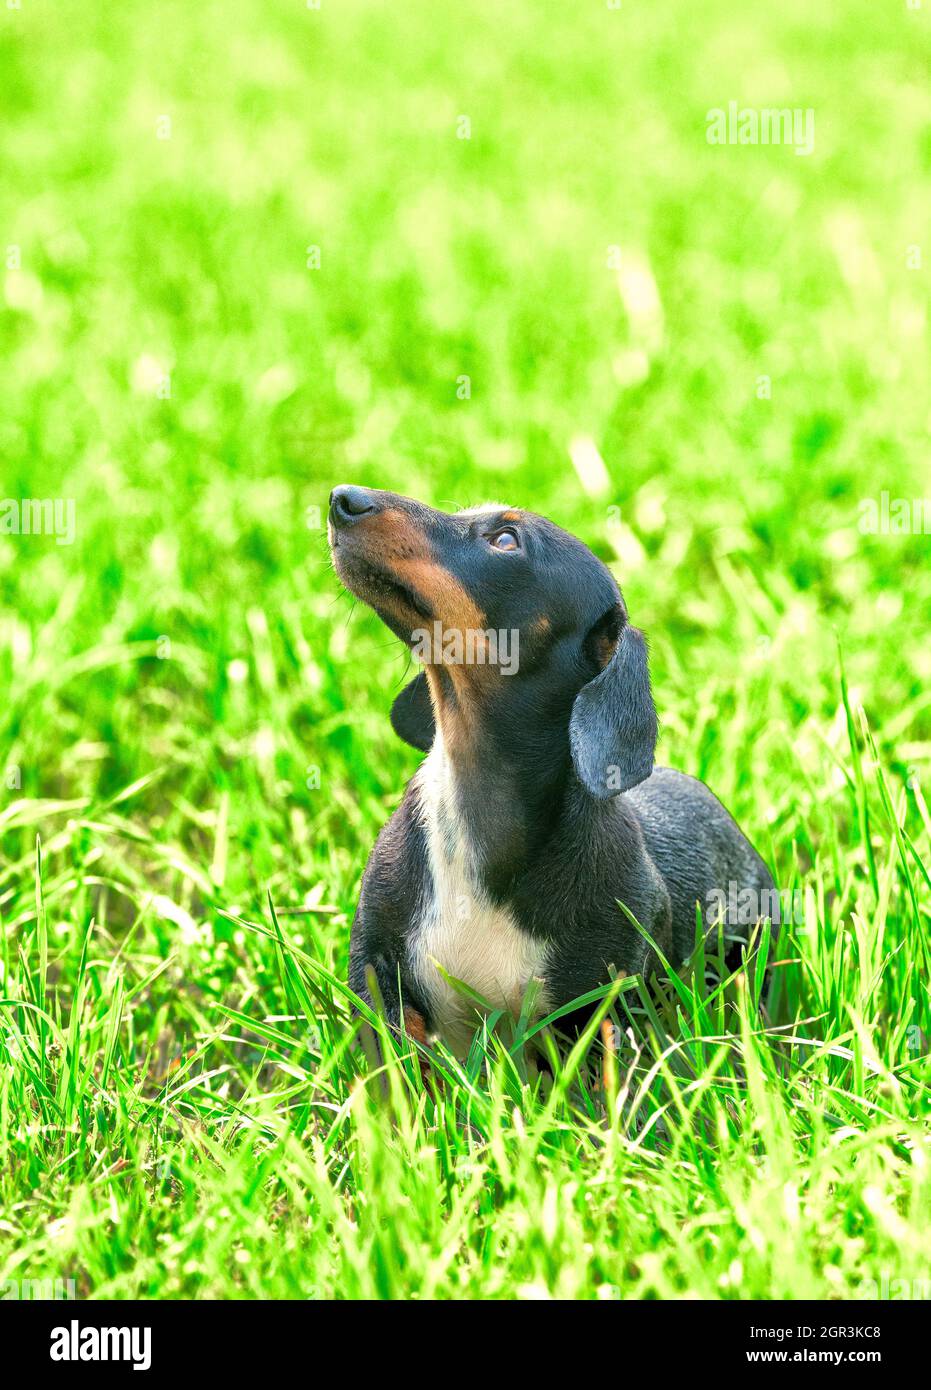 Miniature Black and Tan Dapple Dachshund sitting in a grassy field Stock Photo